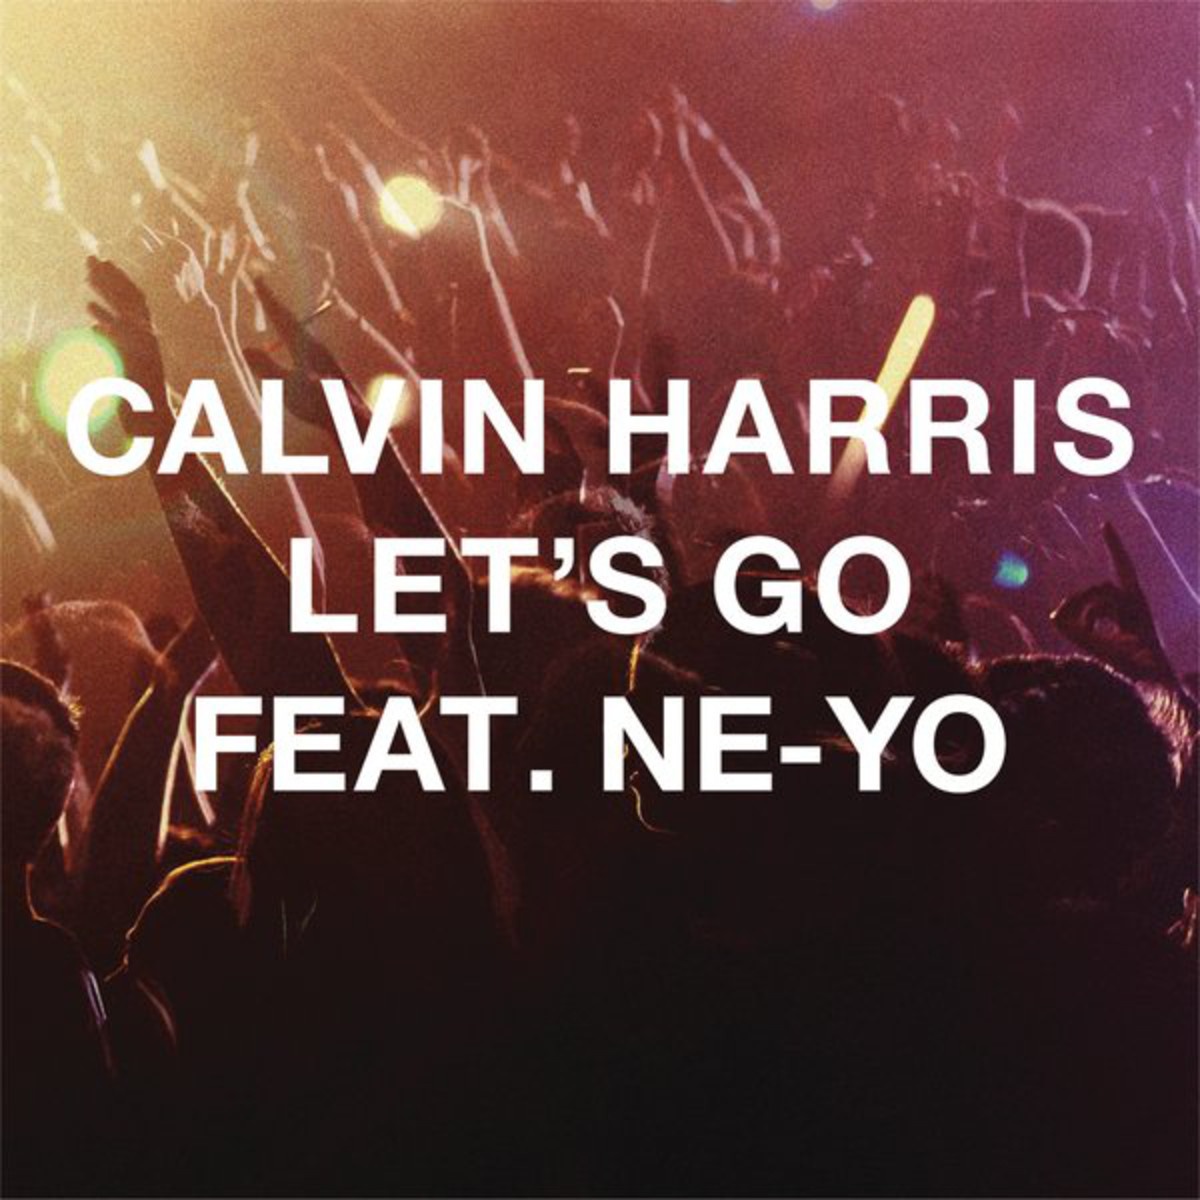 Let's Go - Calvin Harris Remix